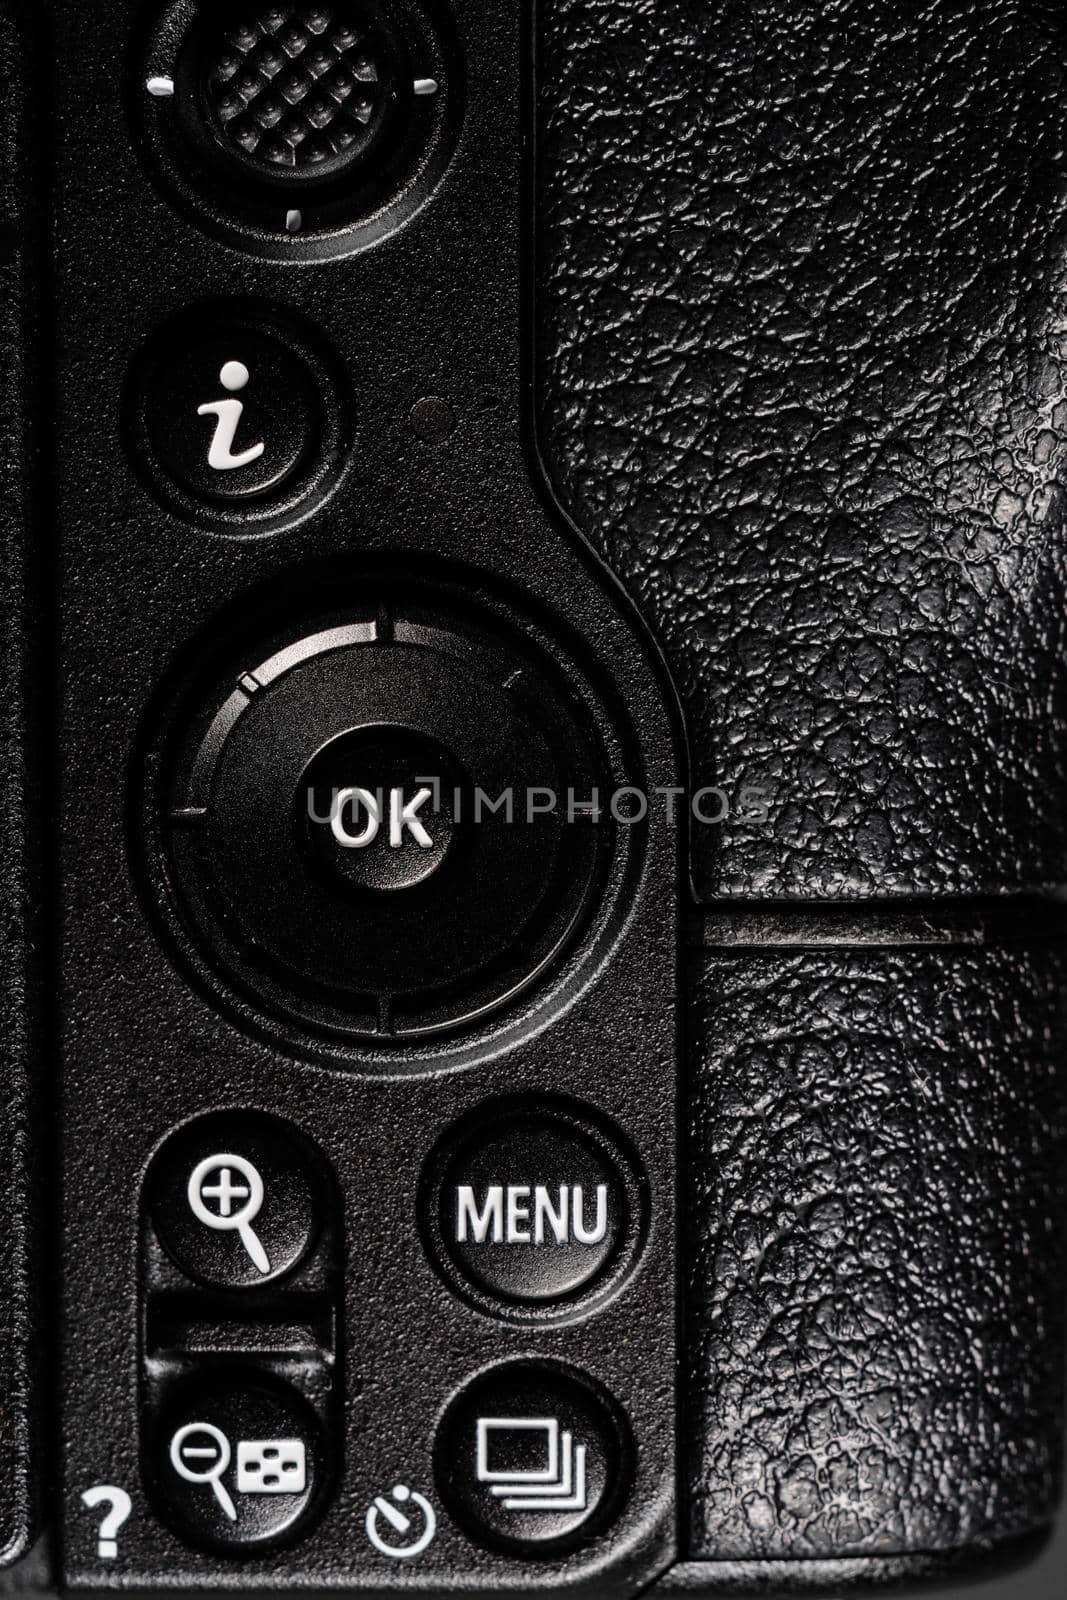 Menu button and other mirrorless camera control buttons. by Niko_Cingaryuk